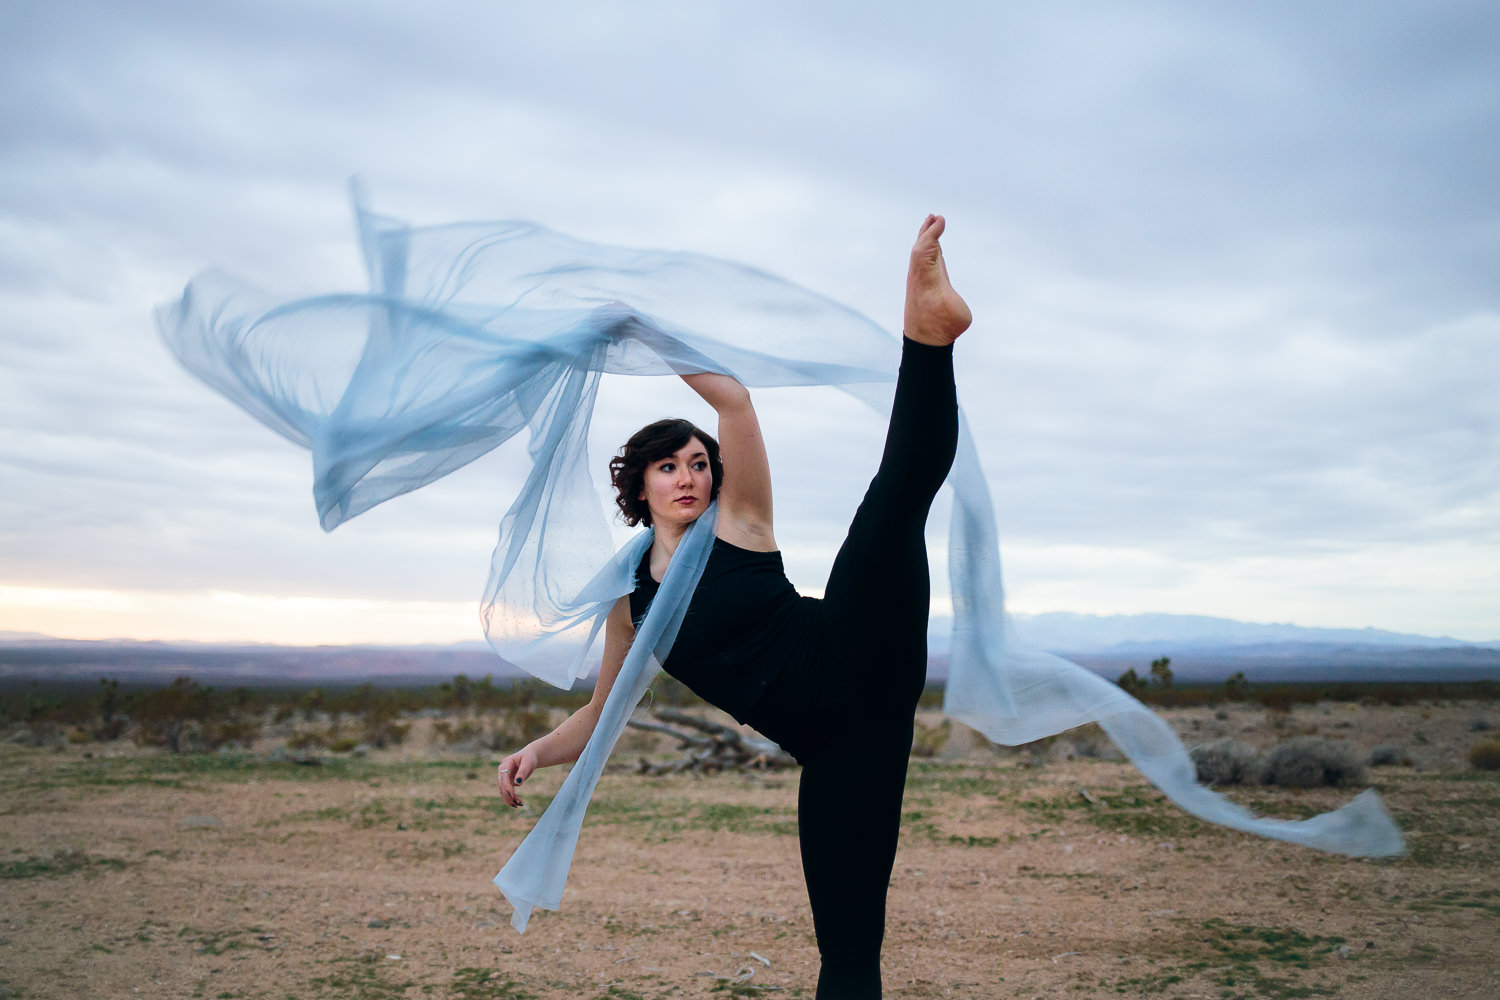 Silk dancer lifestyle Southern Utah Adventure photographer hybrid film and digital